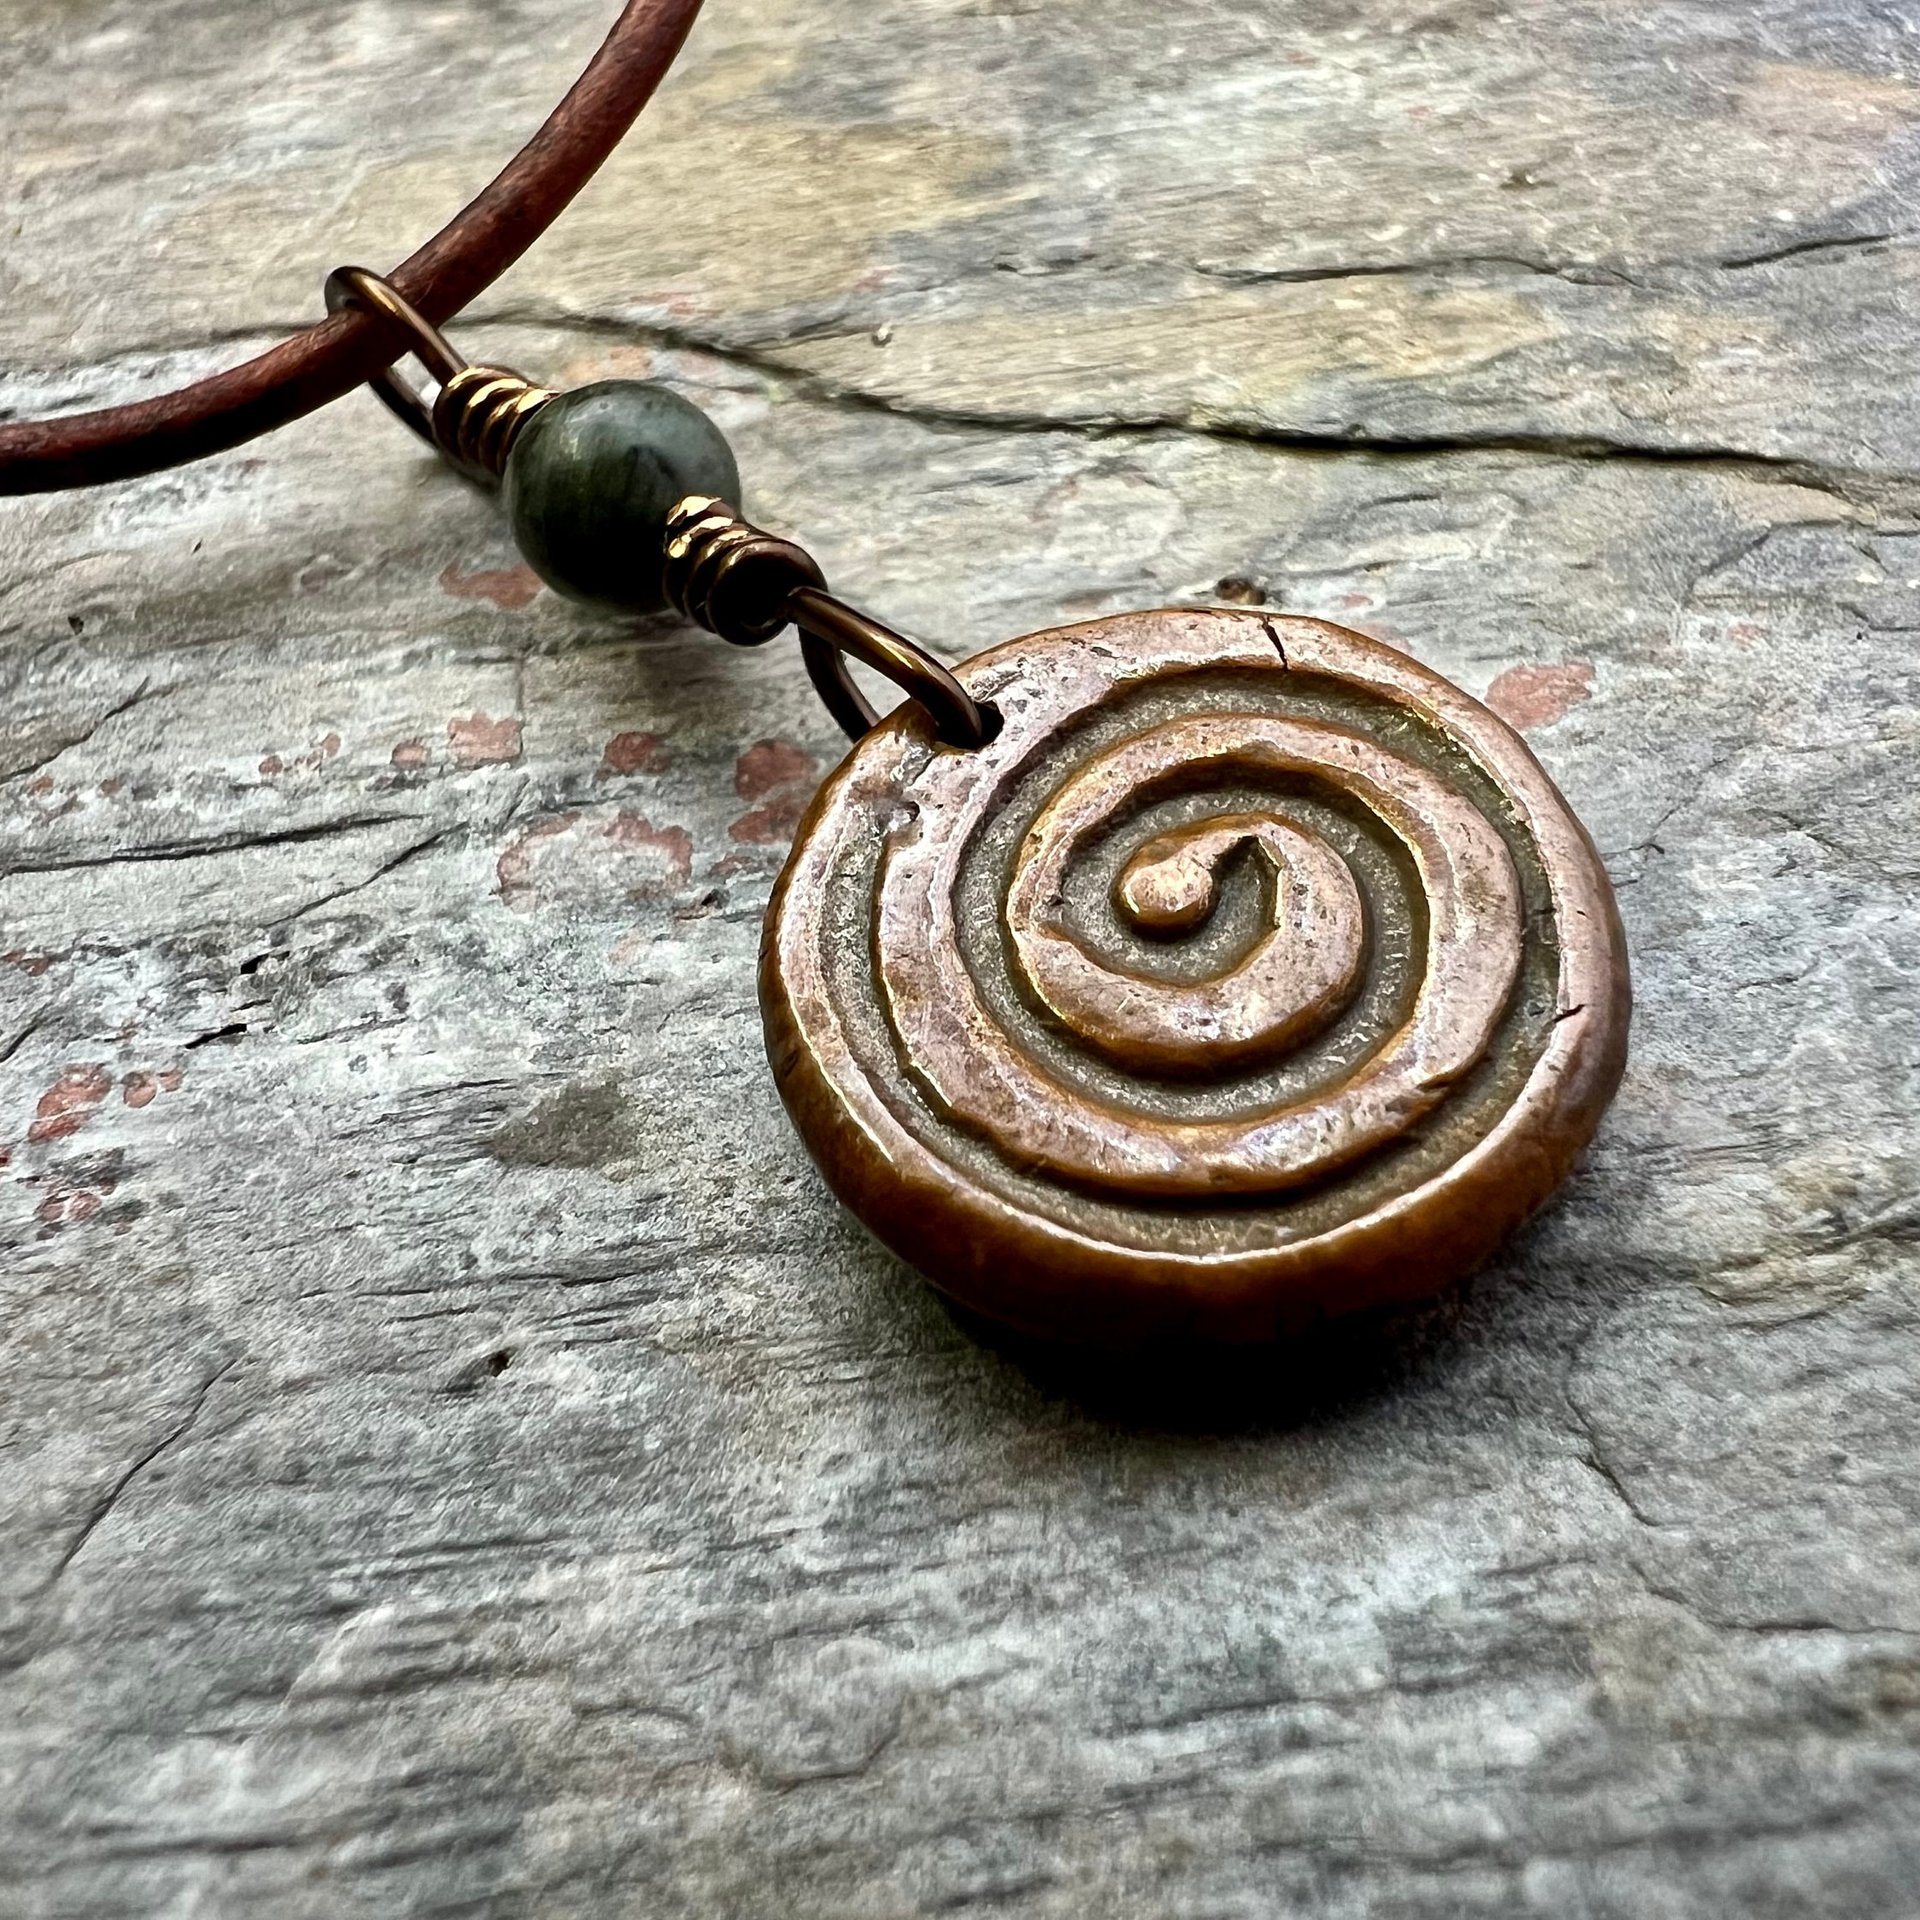 Copper Claddagh Charm, Wax Seal Charm, Kilkenny Marble, Irish Celtic Jewelry, Pagan, 7th Anniversary, Love, Friendship, Loyalty, Handmade